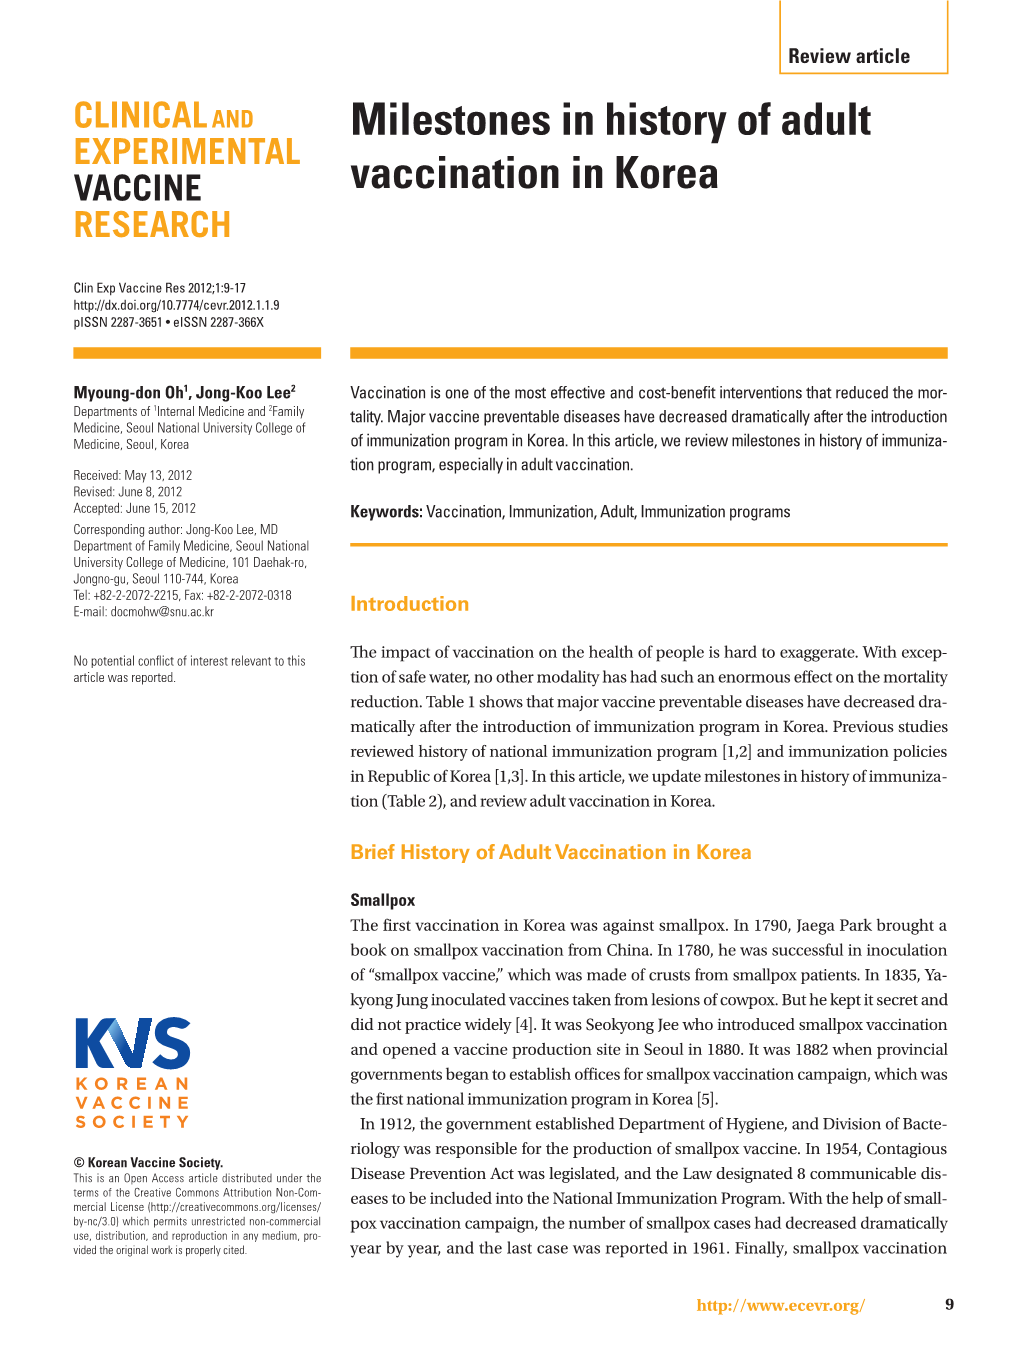 Milestones in History of Adult Vaccination in Korea